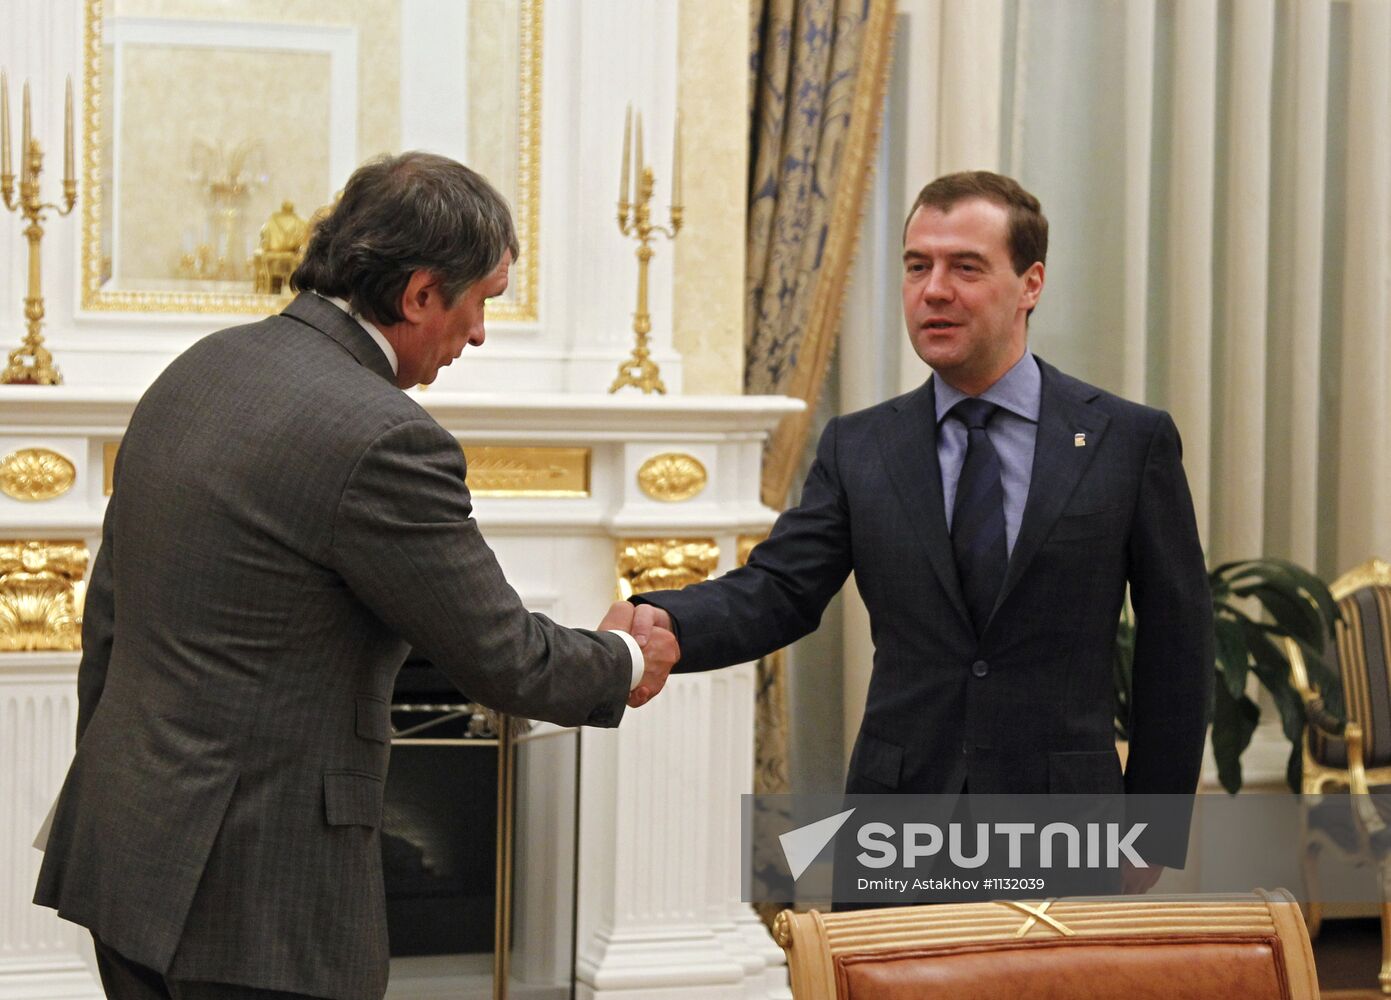 Dmitry Medvedev conducts meetings on May 22, 2012.